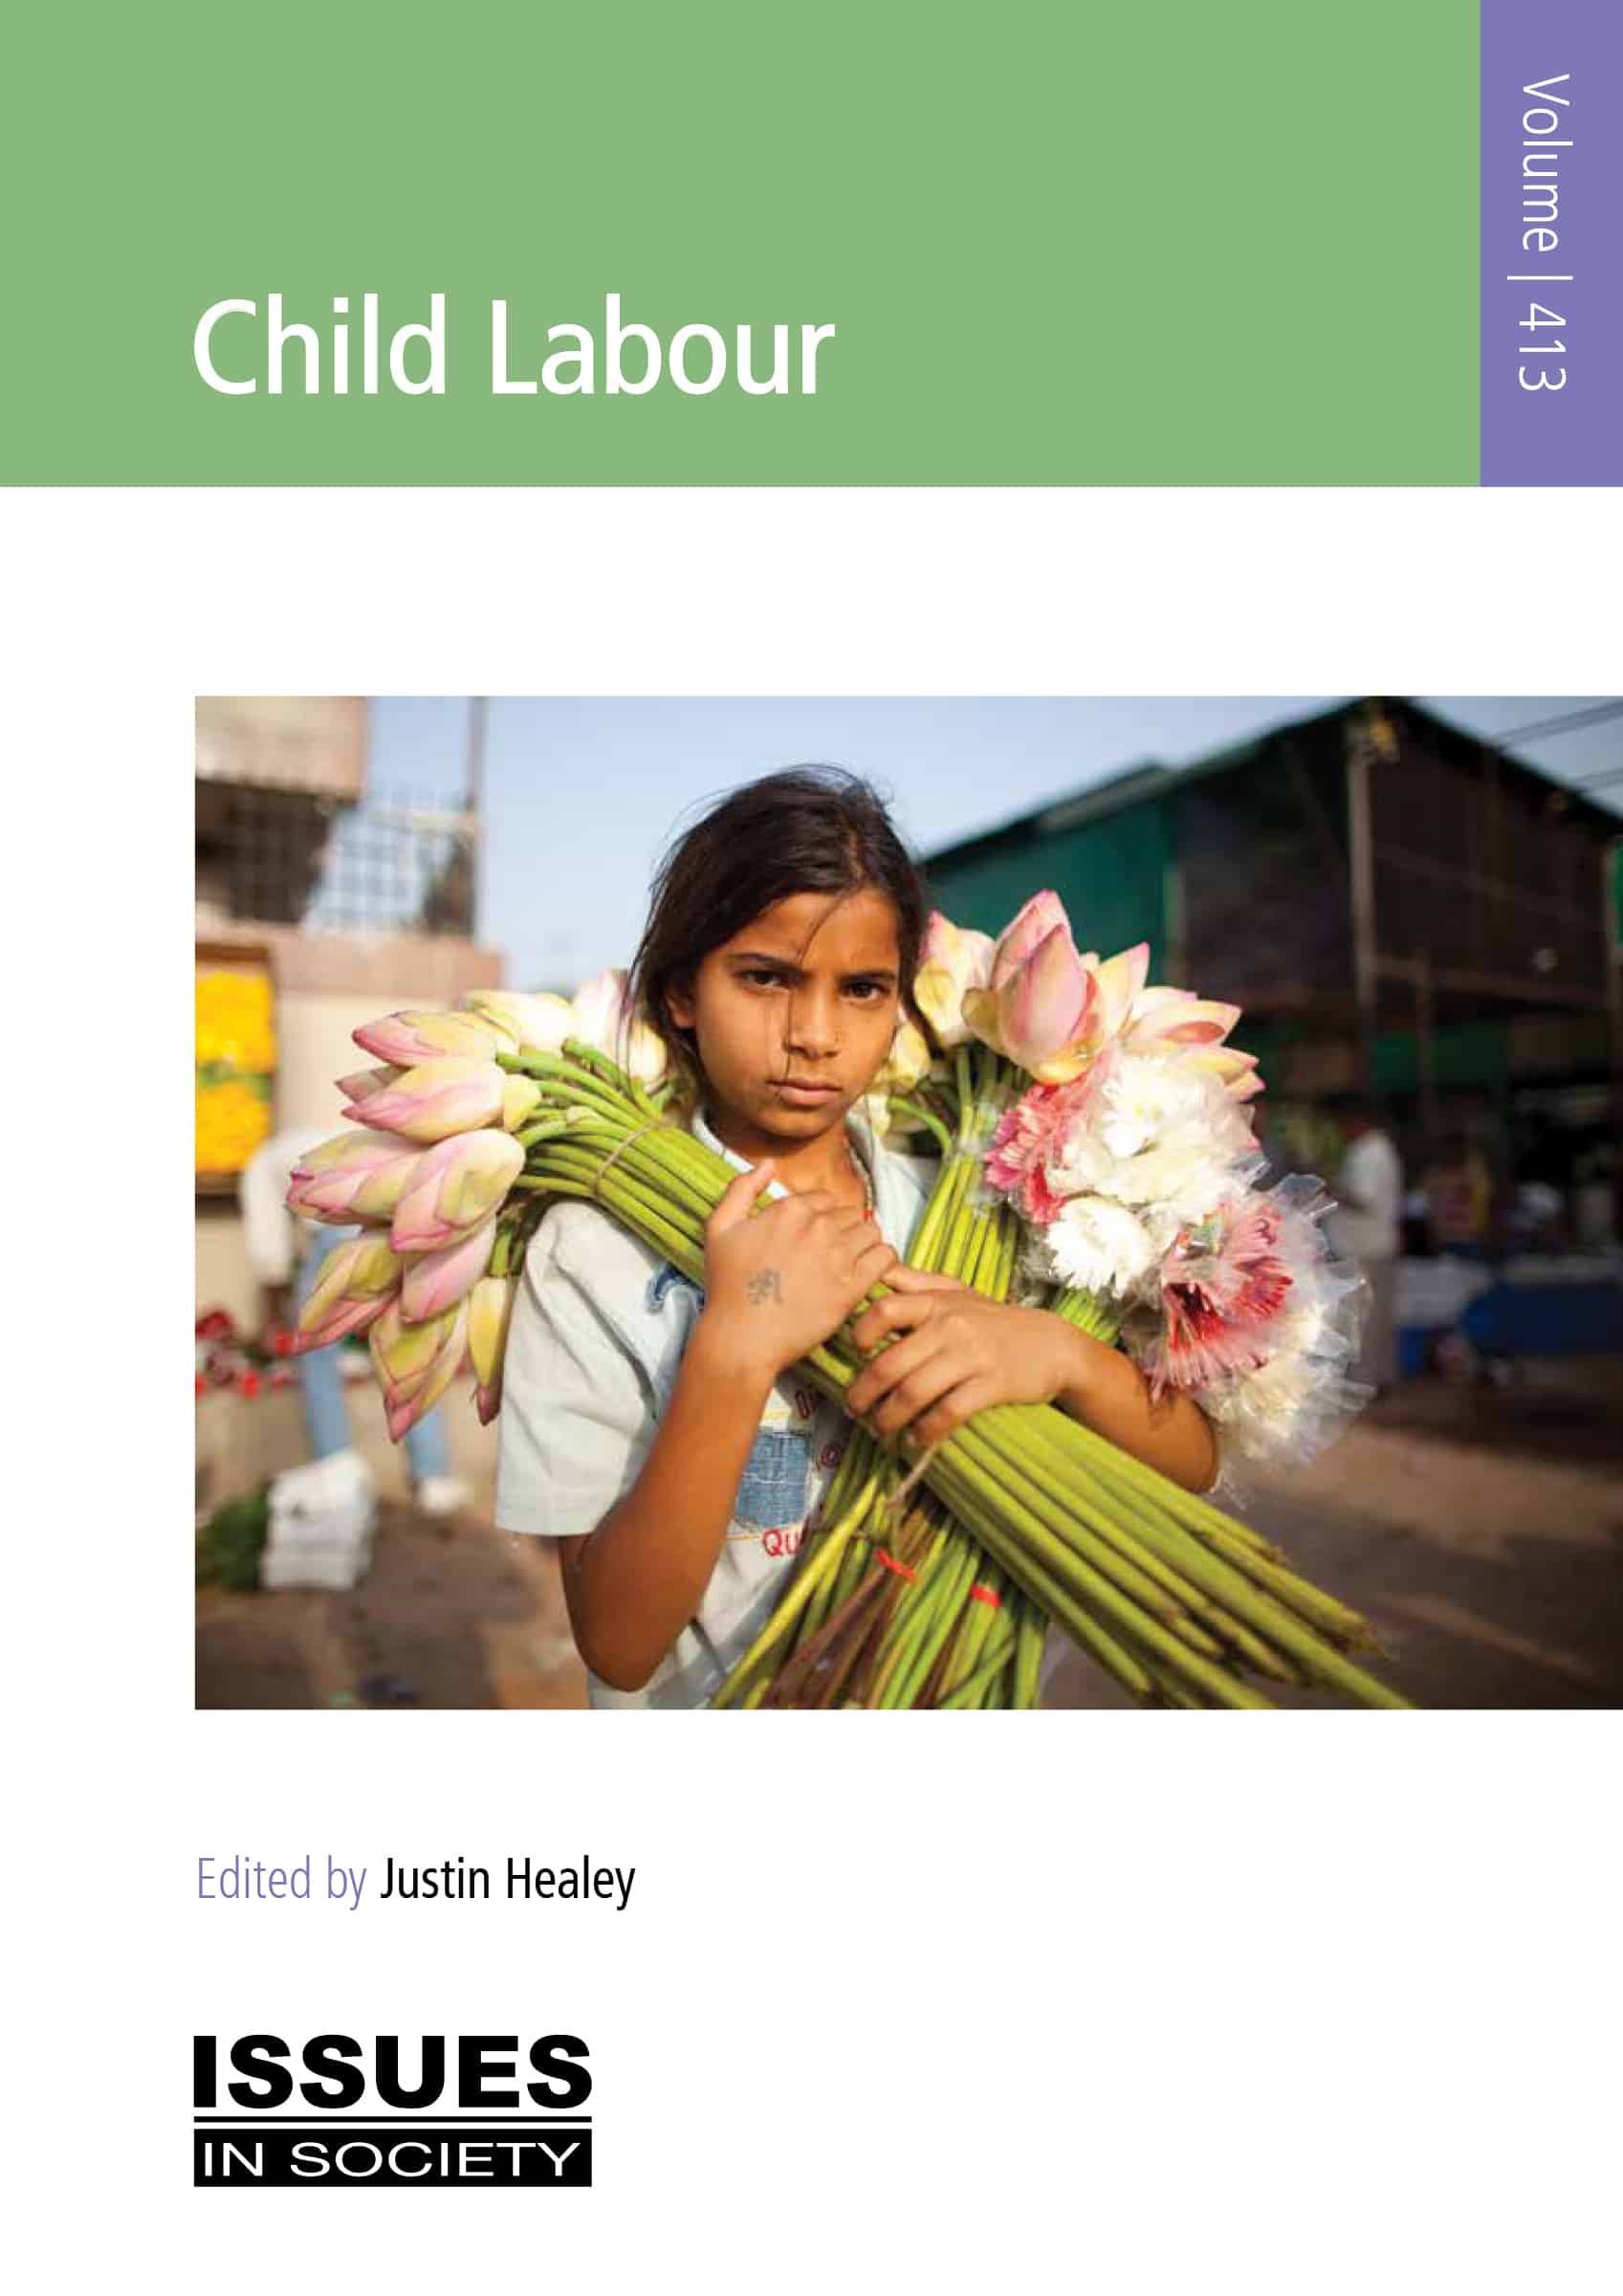 dissertation on child labour